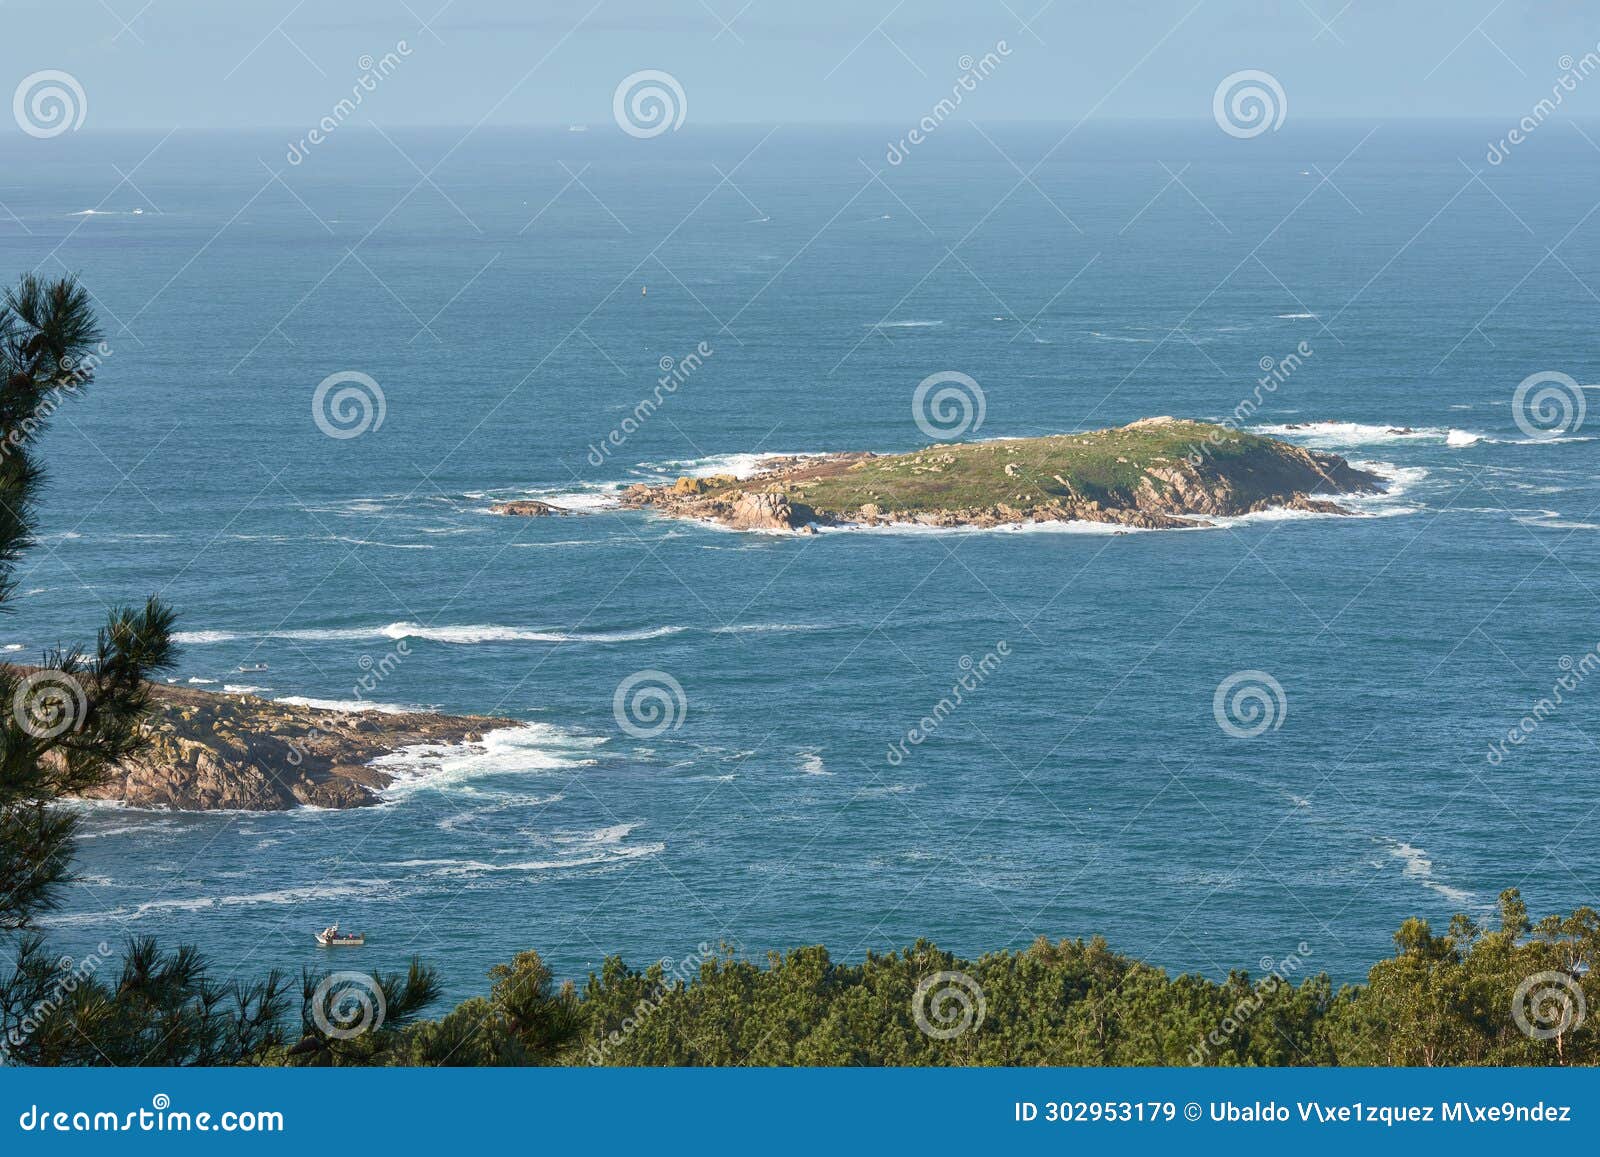 the estela islands in nigrÃ¡n in front of the monteferro peninsula